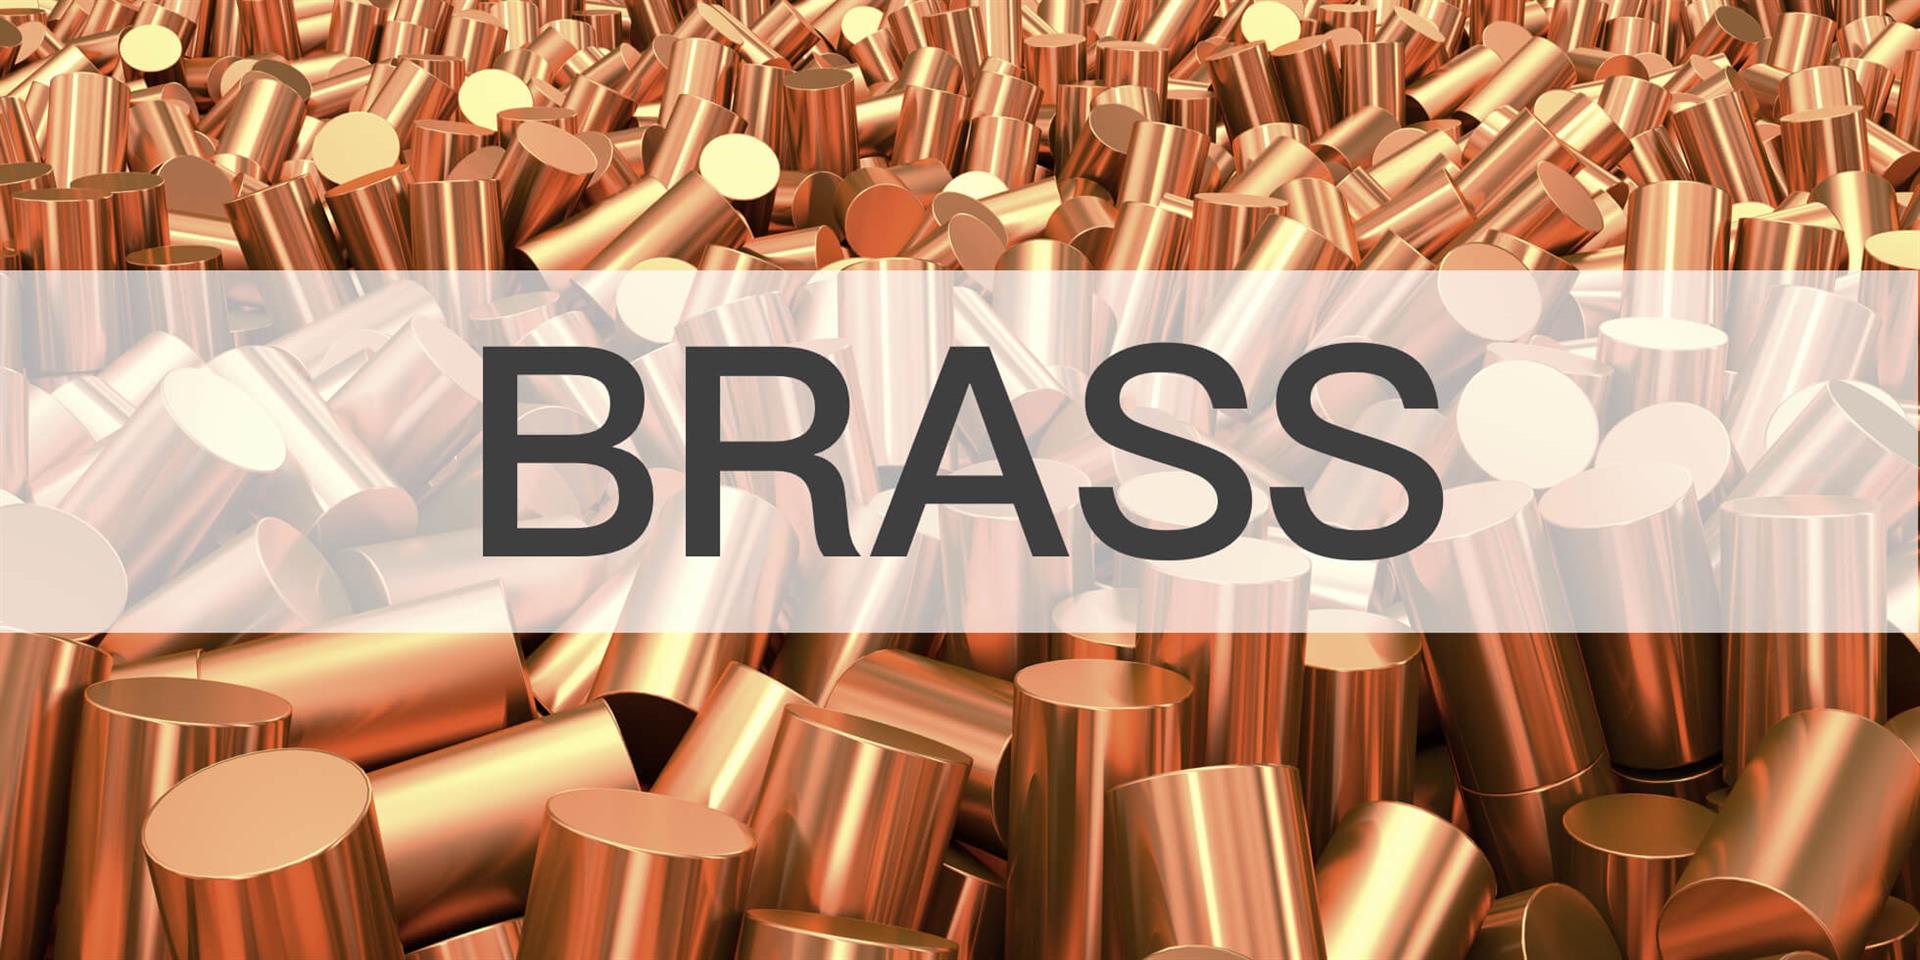 Brass Metal Material Characterization